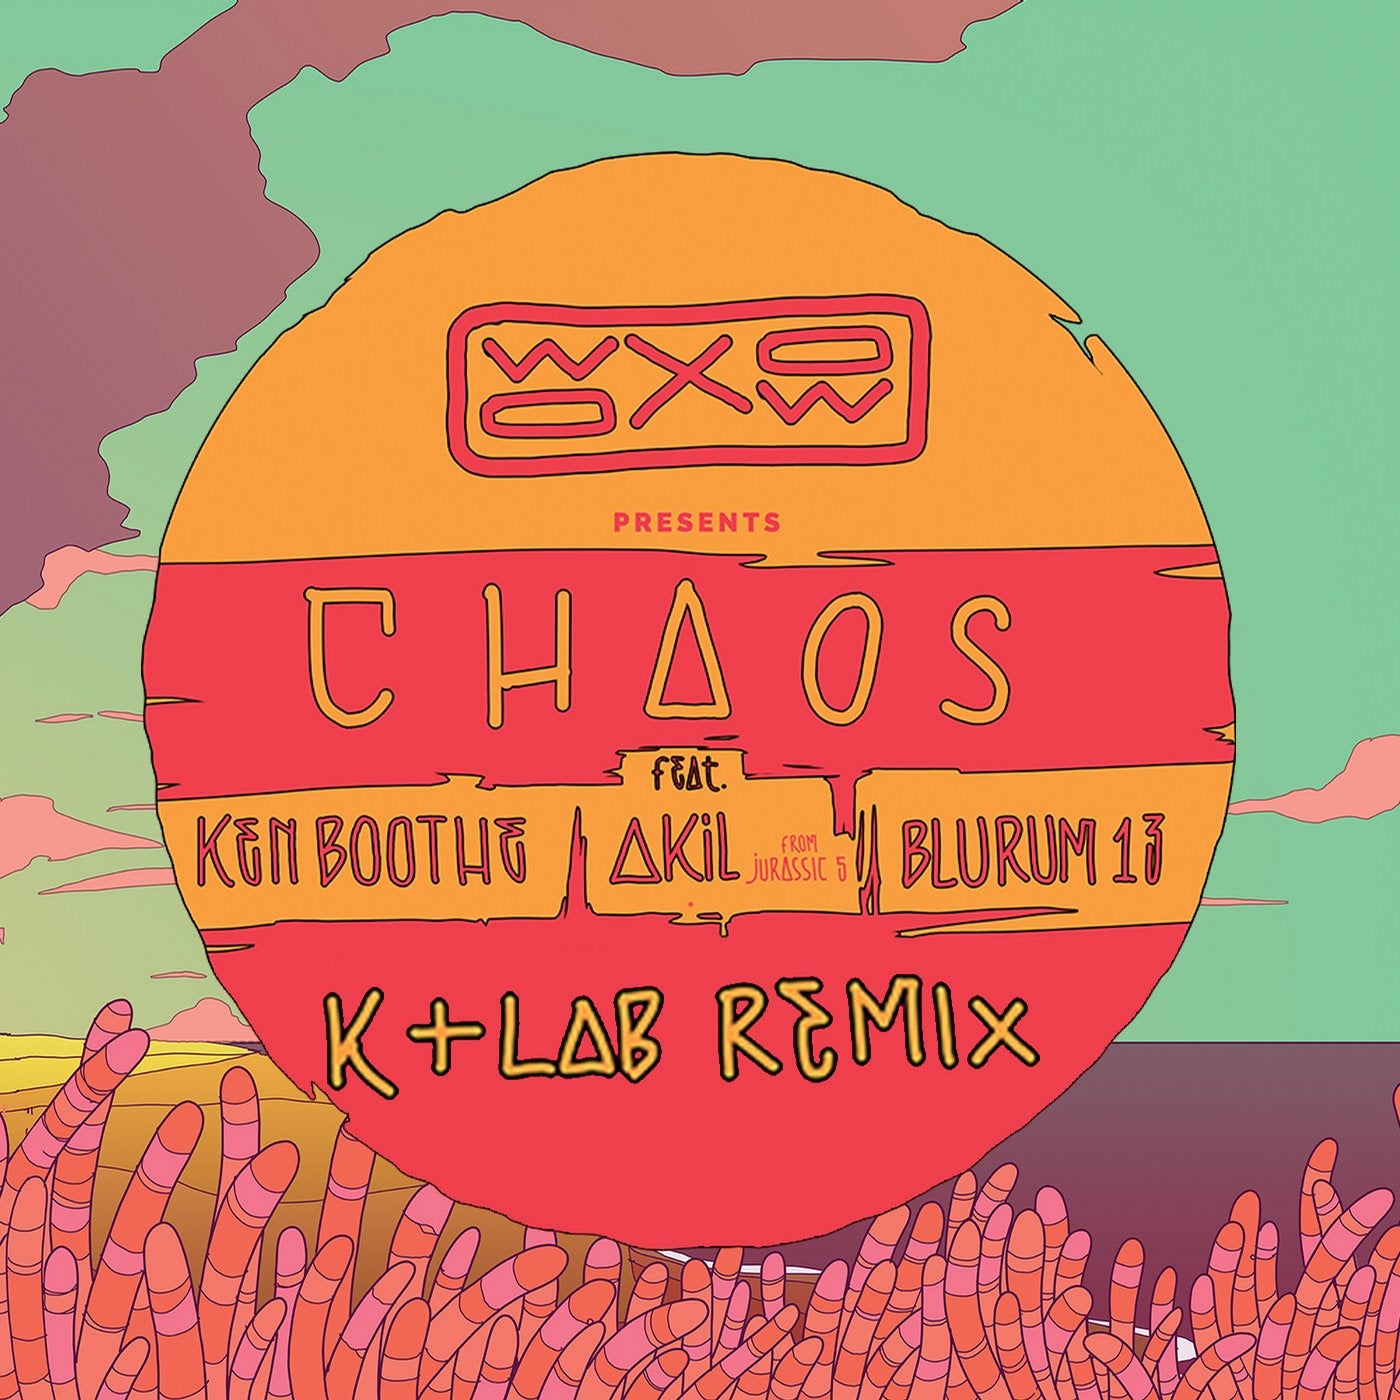 Chaos (K+Lab Remix) feat. Ken Boothe, Blurum13 & Akil of Jurassic 5